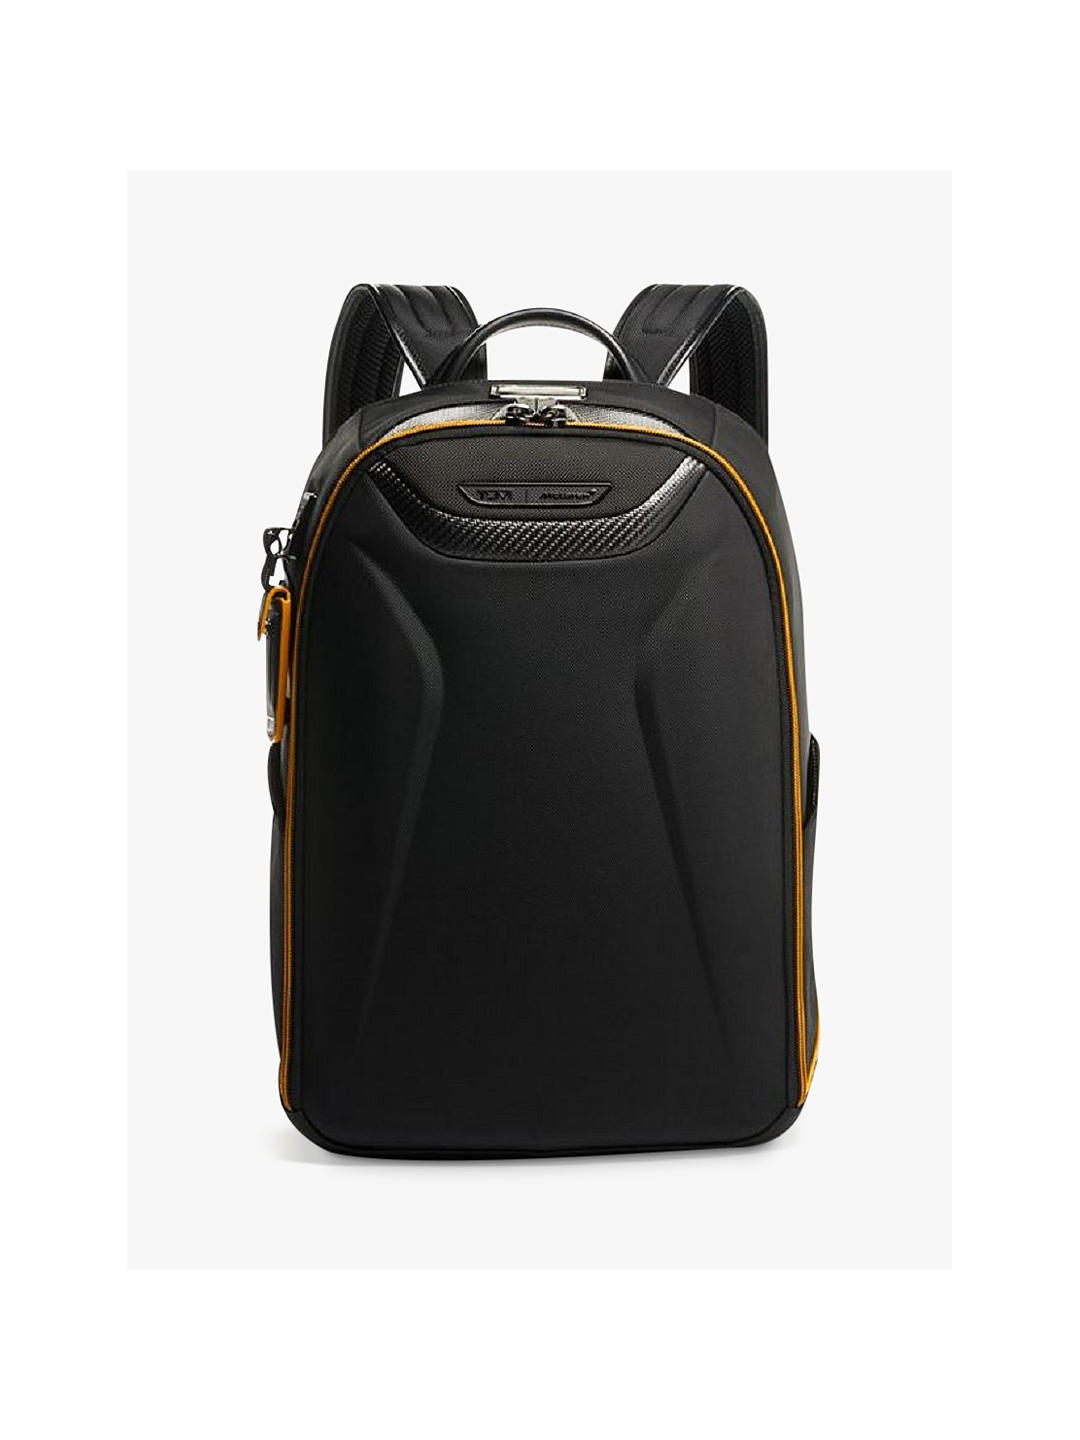 TUMI x McLaren Velocity Backpack, Black